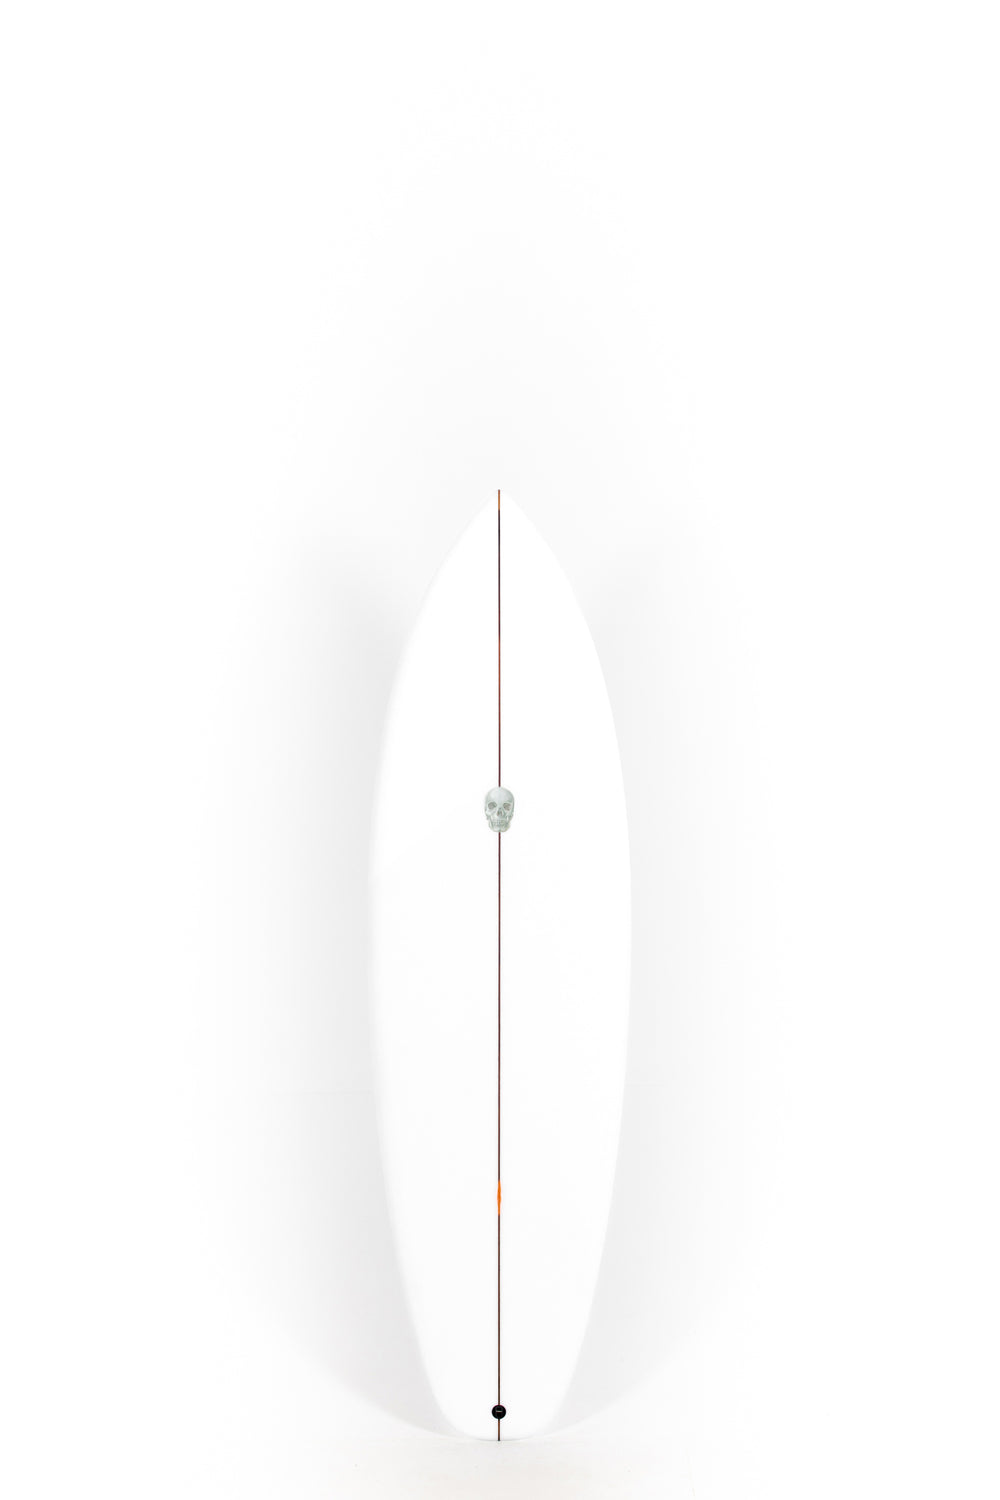 Christenson Surfboard - SURFER ROSA - 5'10” x 19 3/4 x 2 7/16 